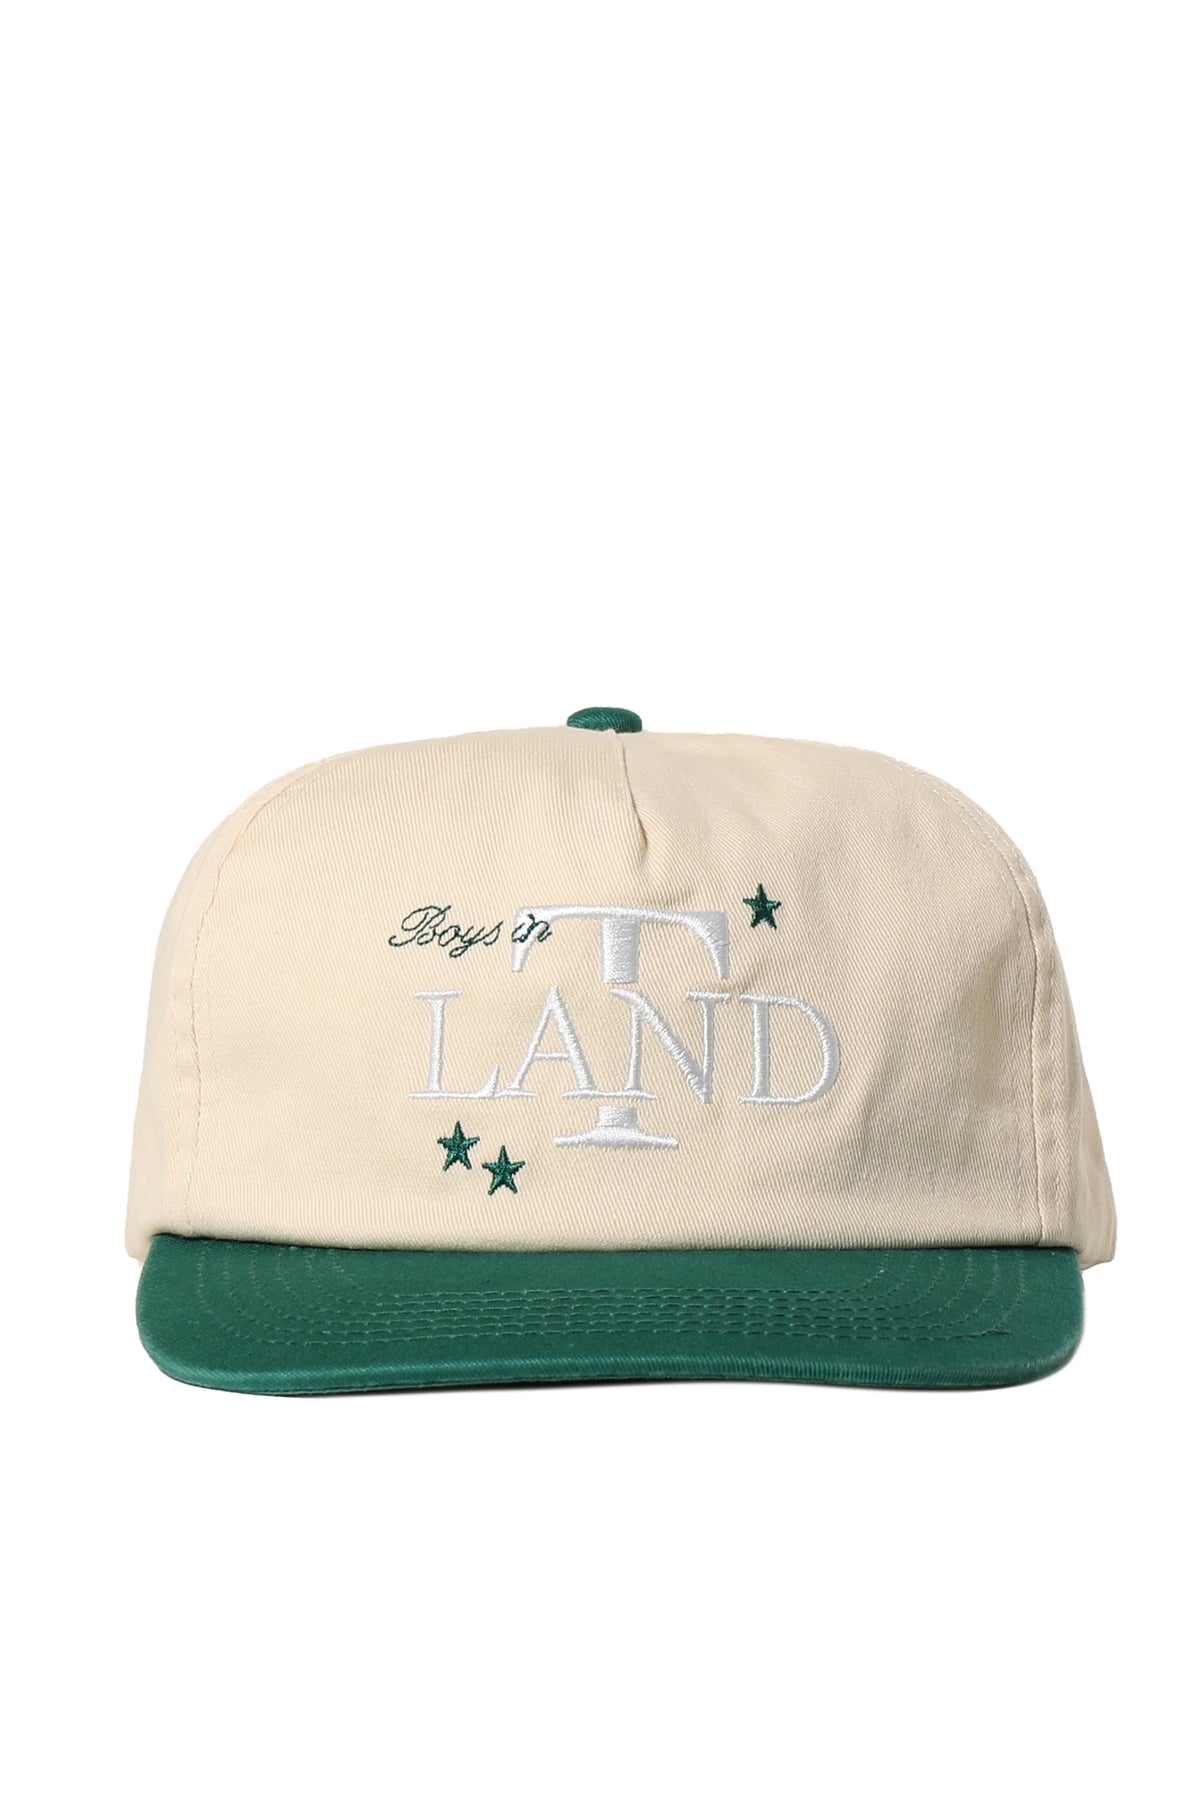 T-LAND CAP / GRN